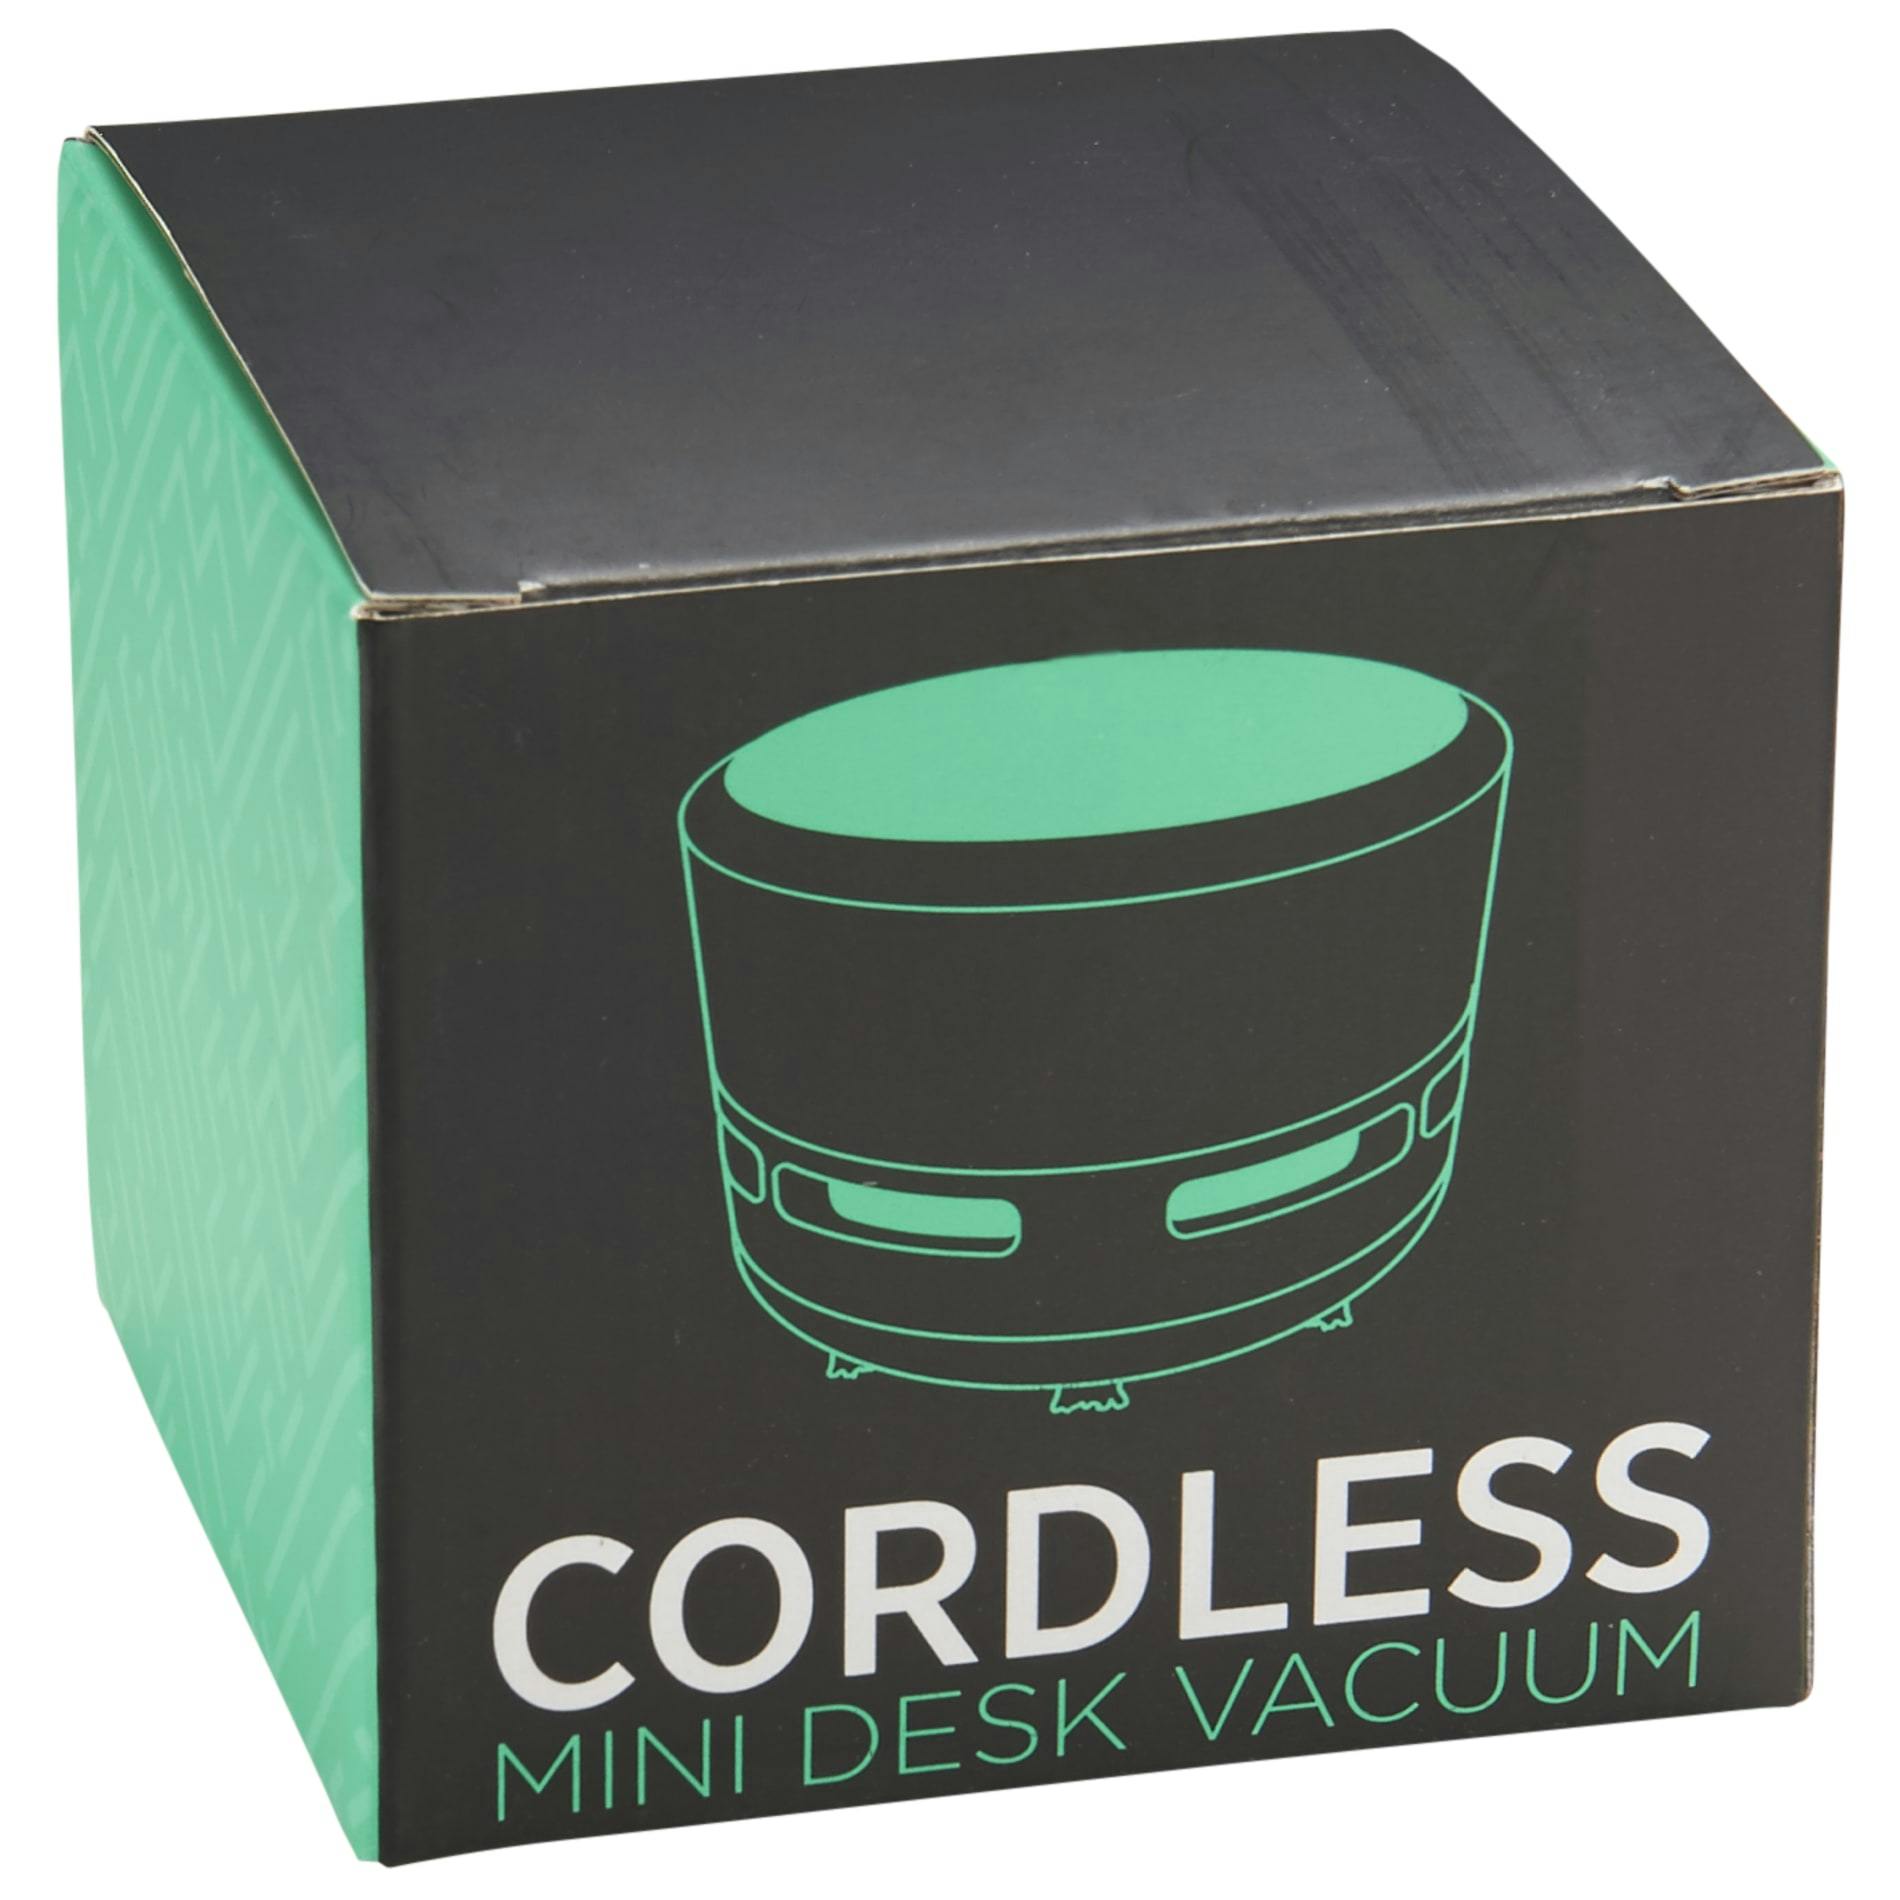 Cordless Mini Desk Vacuum - additional Image 1